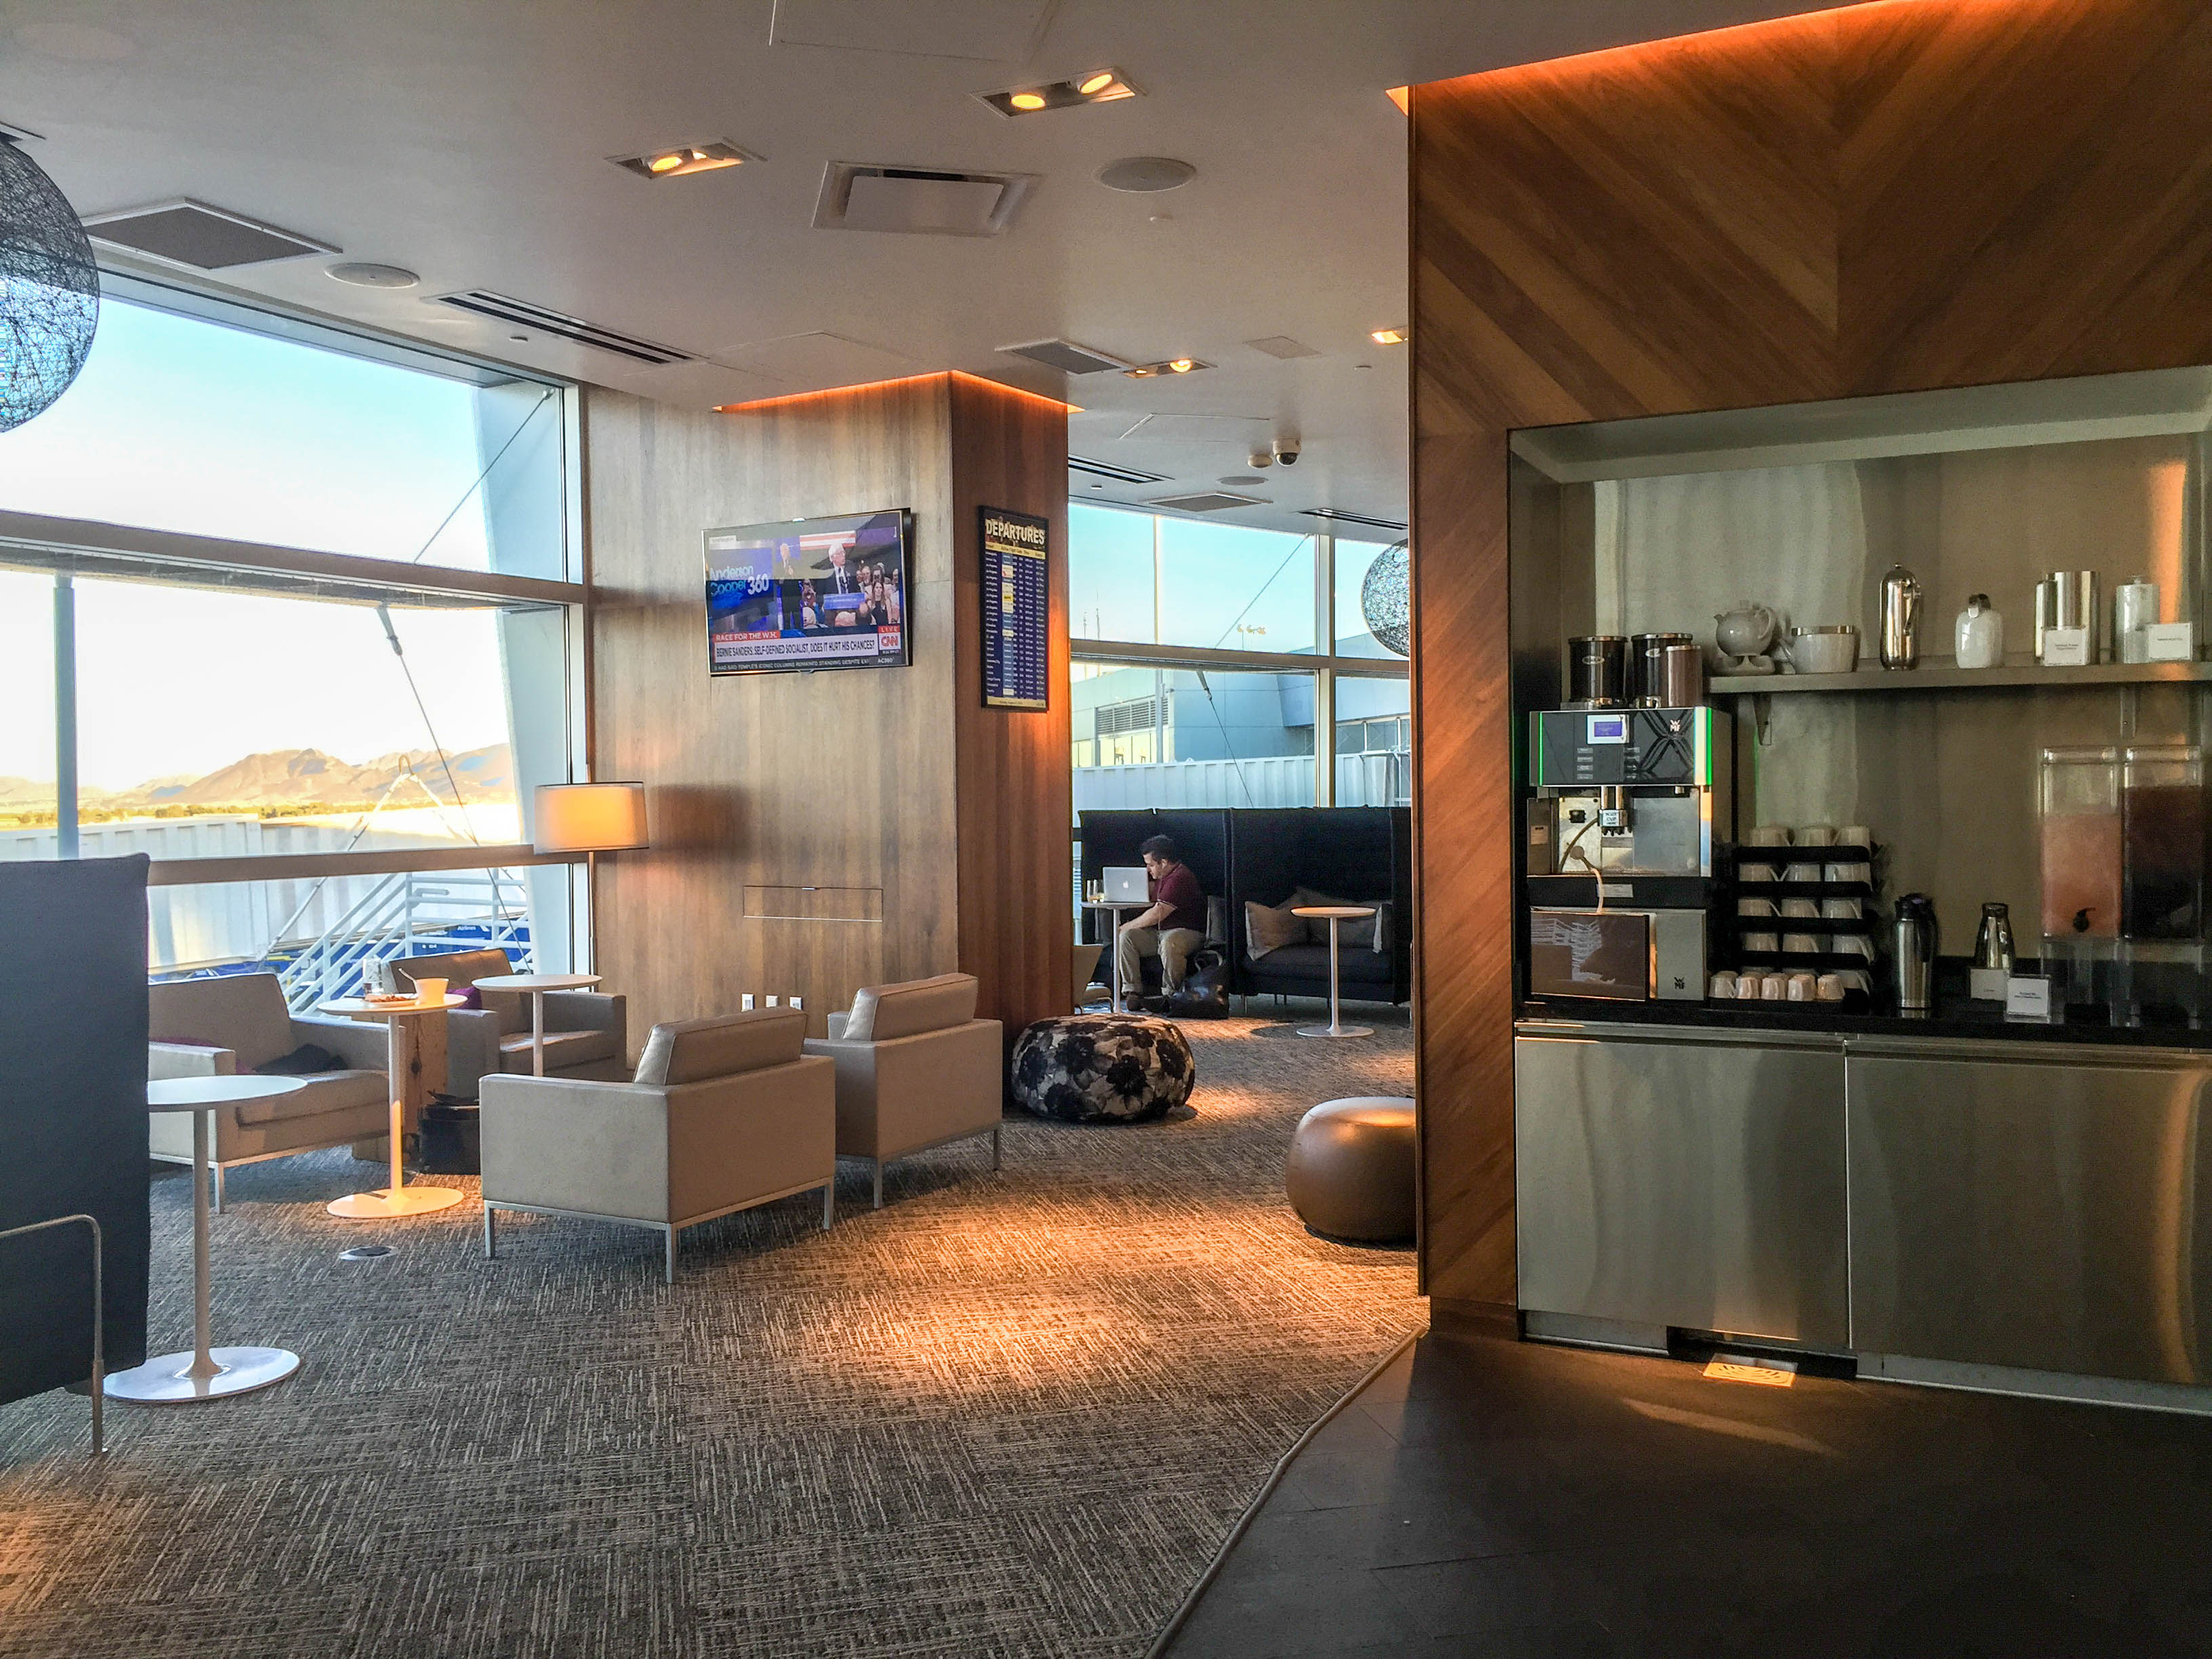 Centurion Lounge At Las Vegas Airport Passport To Friday Luxury